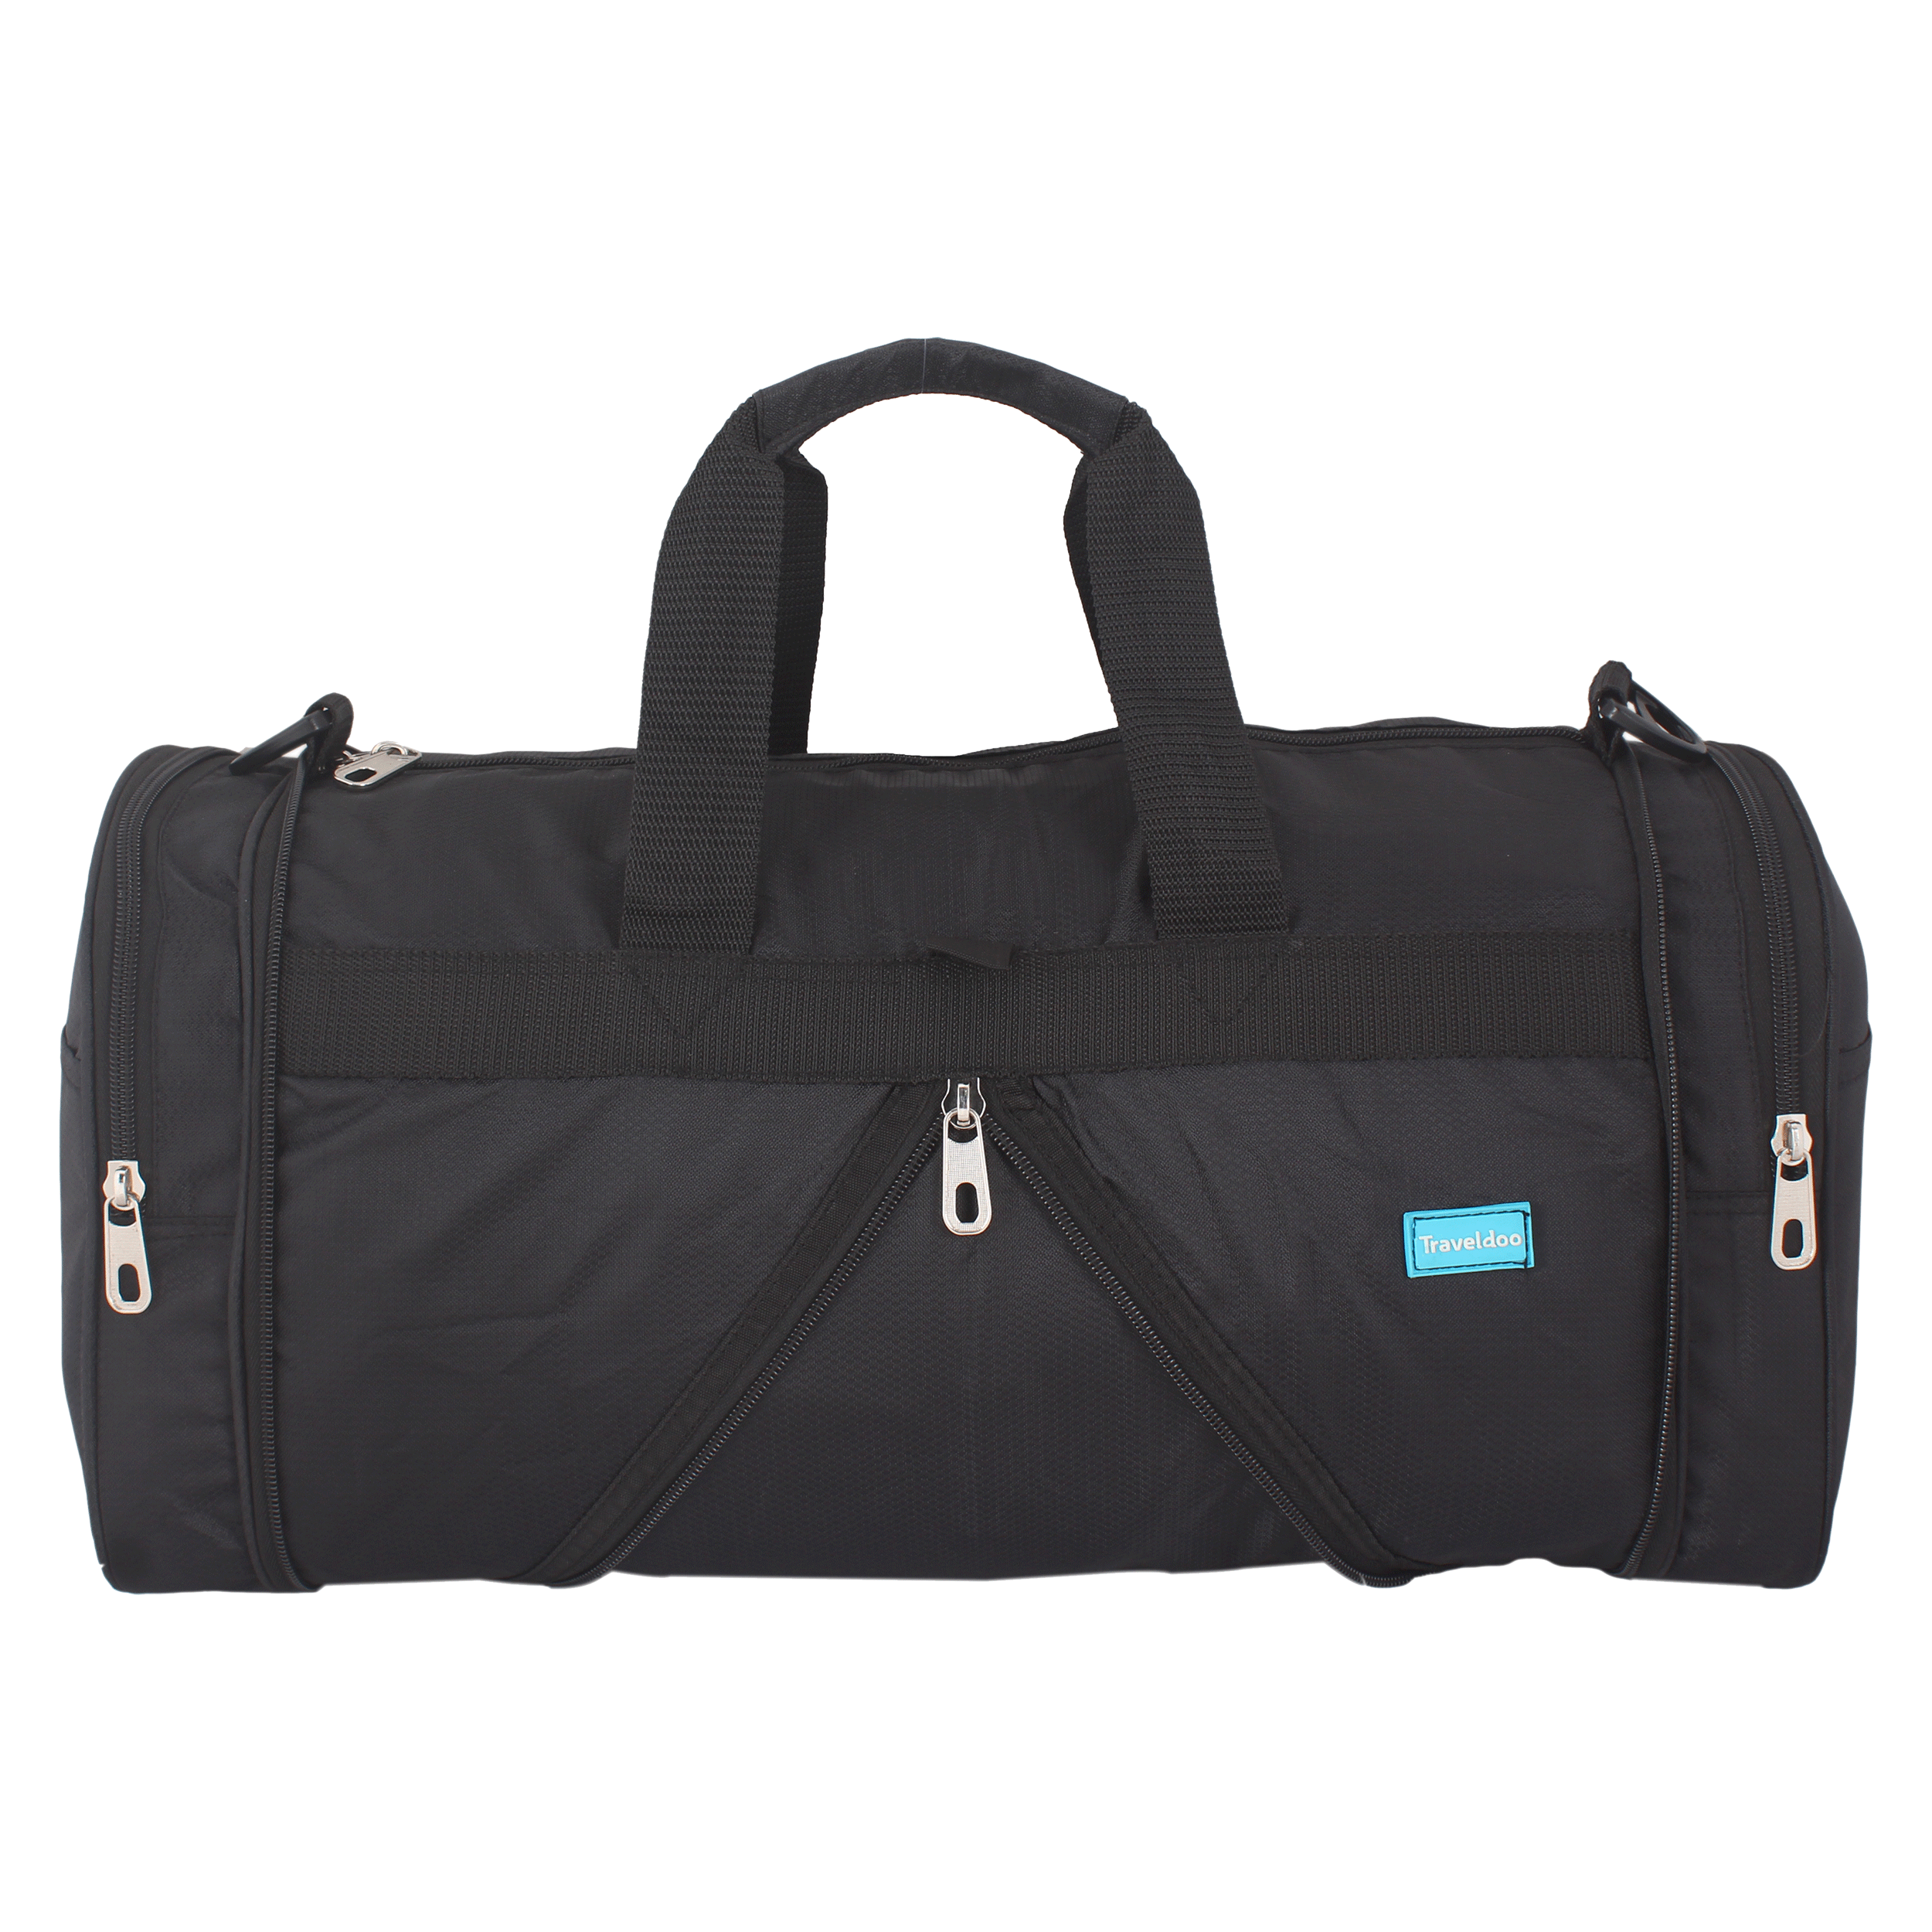 Traveldoo 22 inch Square Folding Duffle Bag (DBS02002, Black)